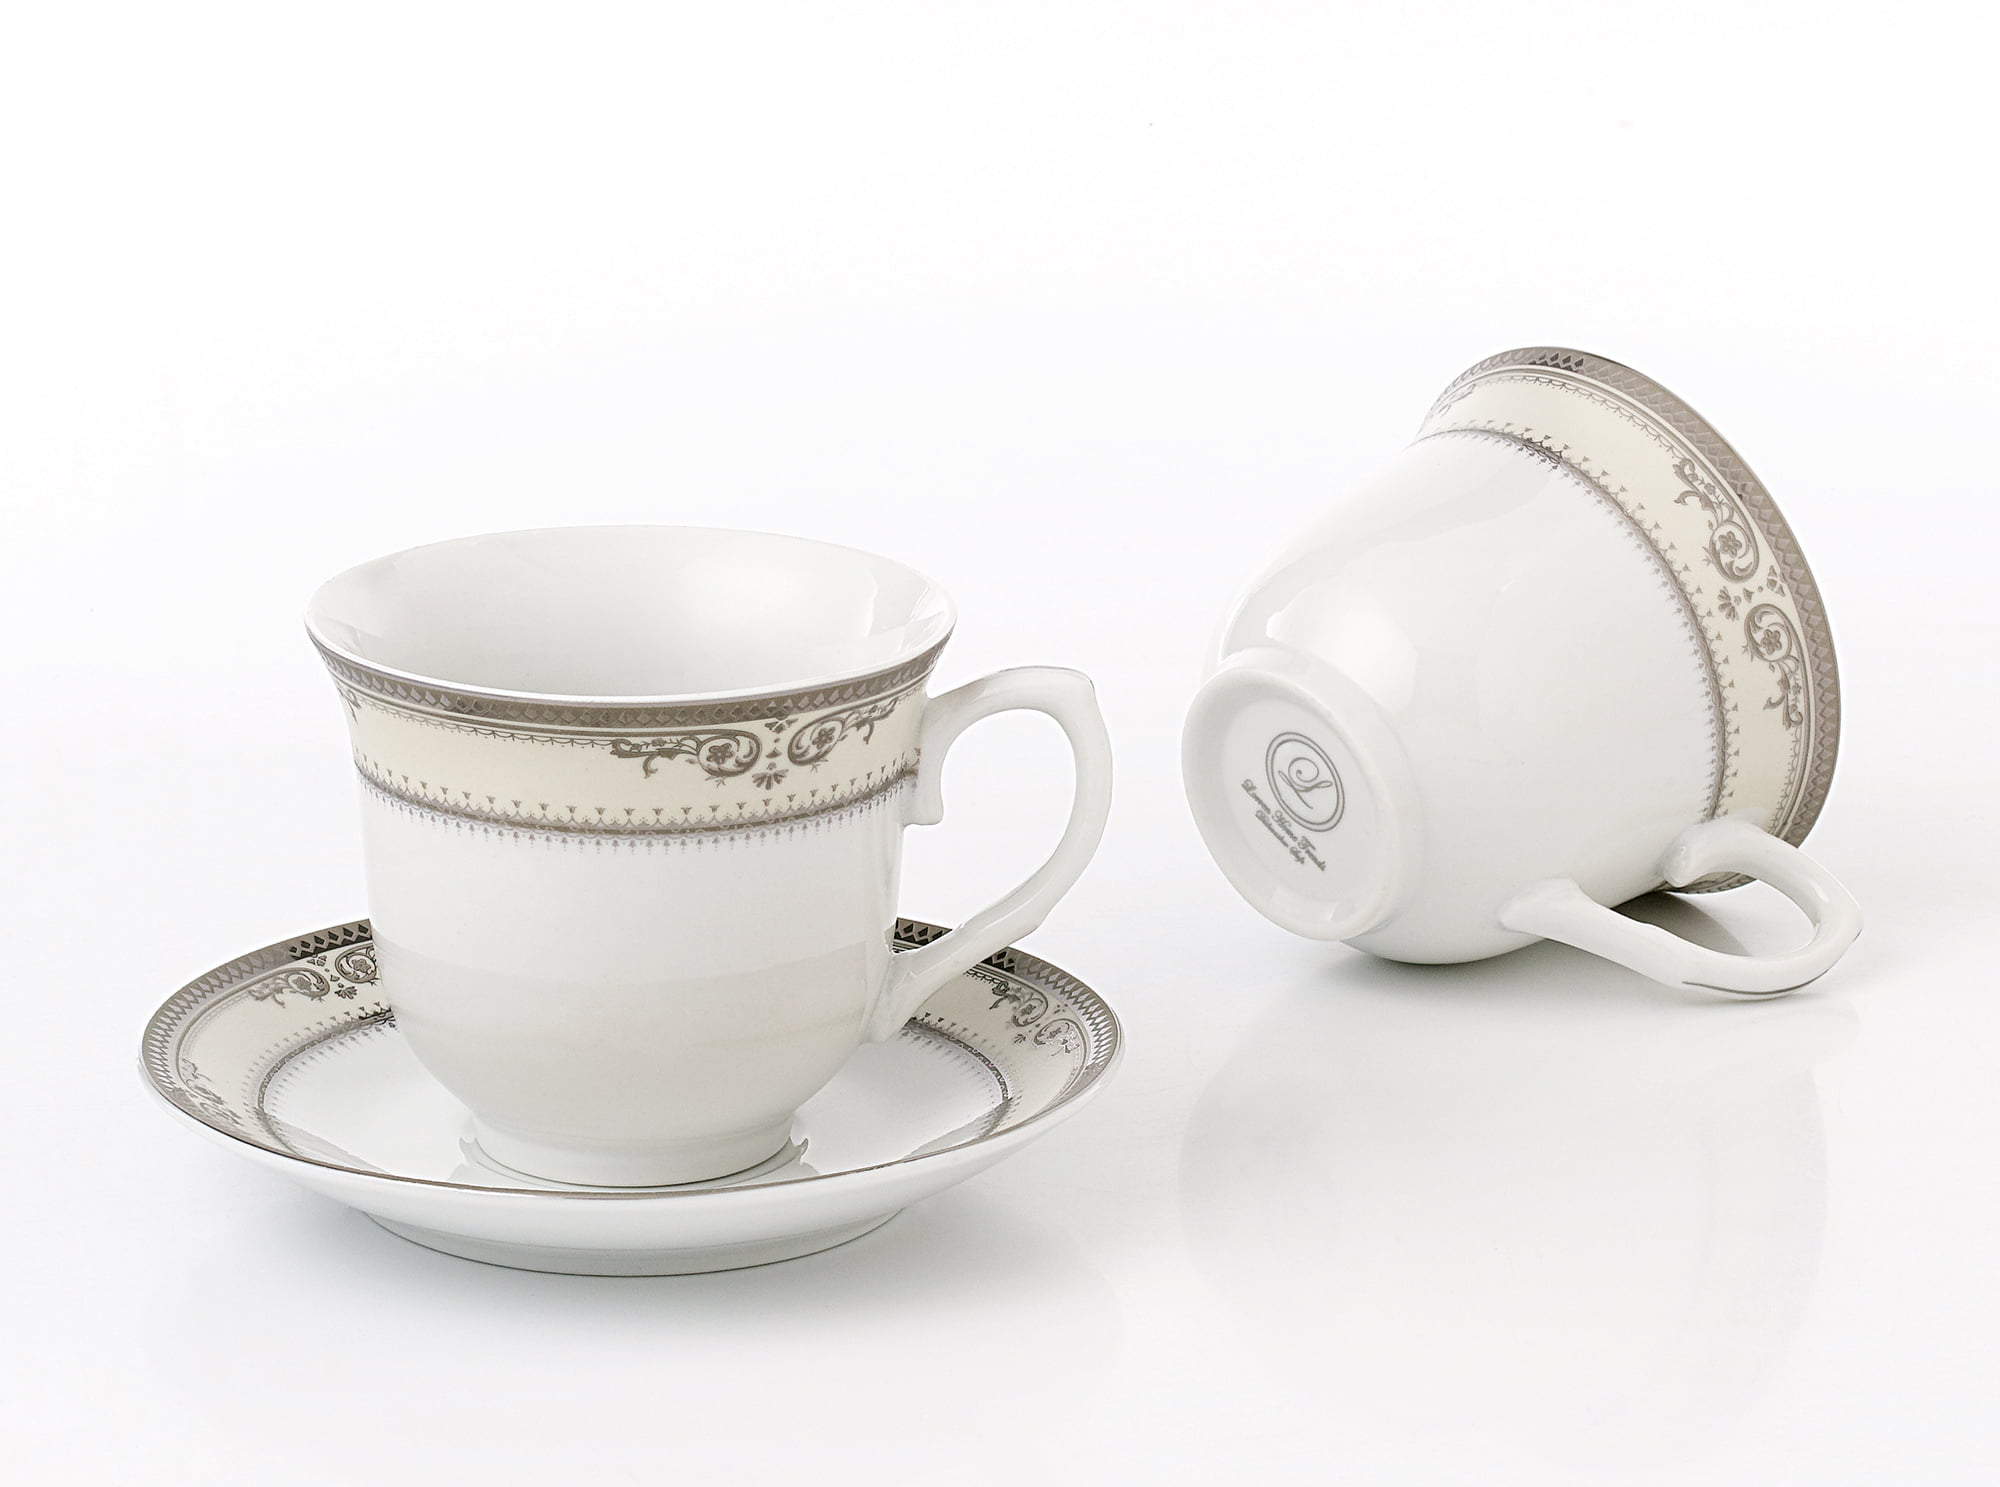 JOYOFUN Coffee Cups and Saucers Set of 2,8 oz Tea Cup and Saucer Royal  Vintage Ceramic Floral Lined …See more JOYOFUN Coffee Cups and Saucers Set  of